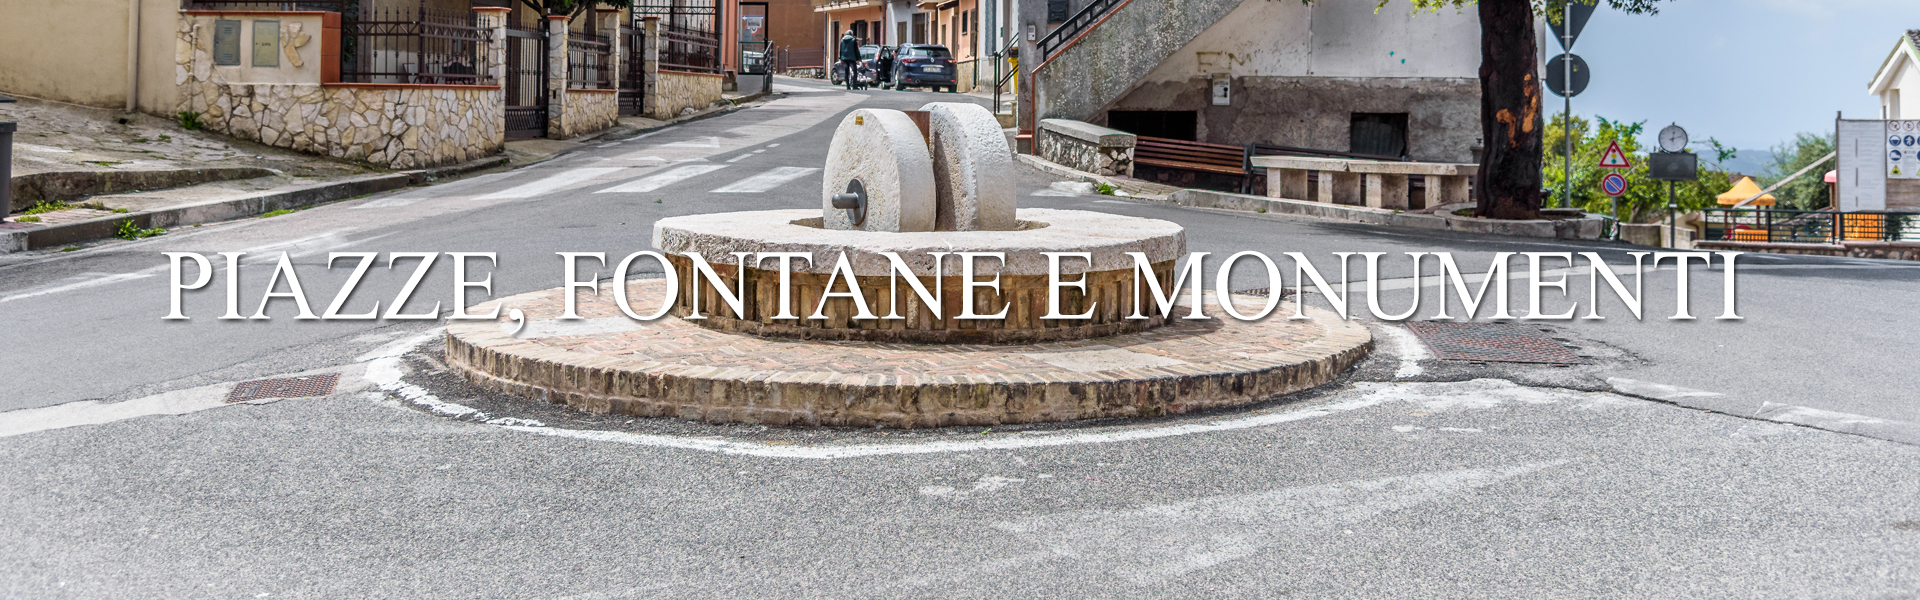 piazze-fontane-monumenti-1920x600